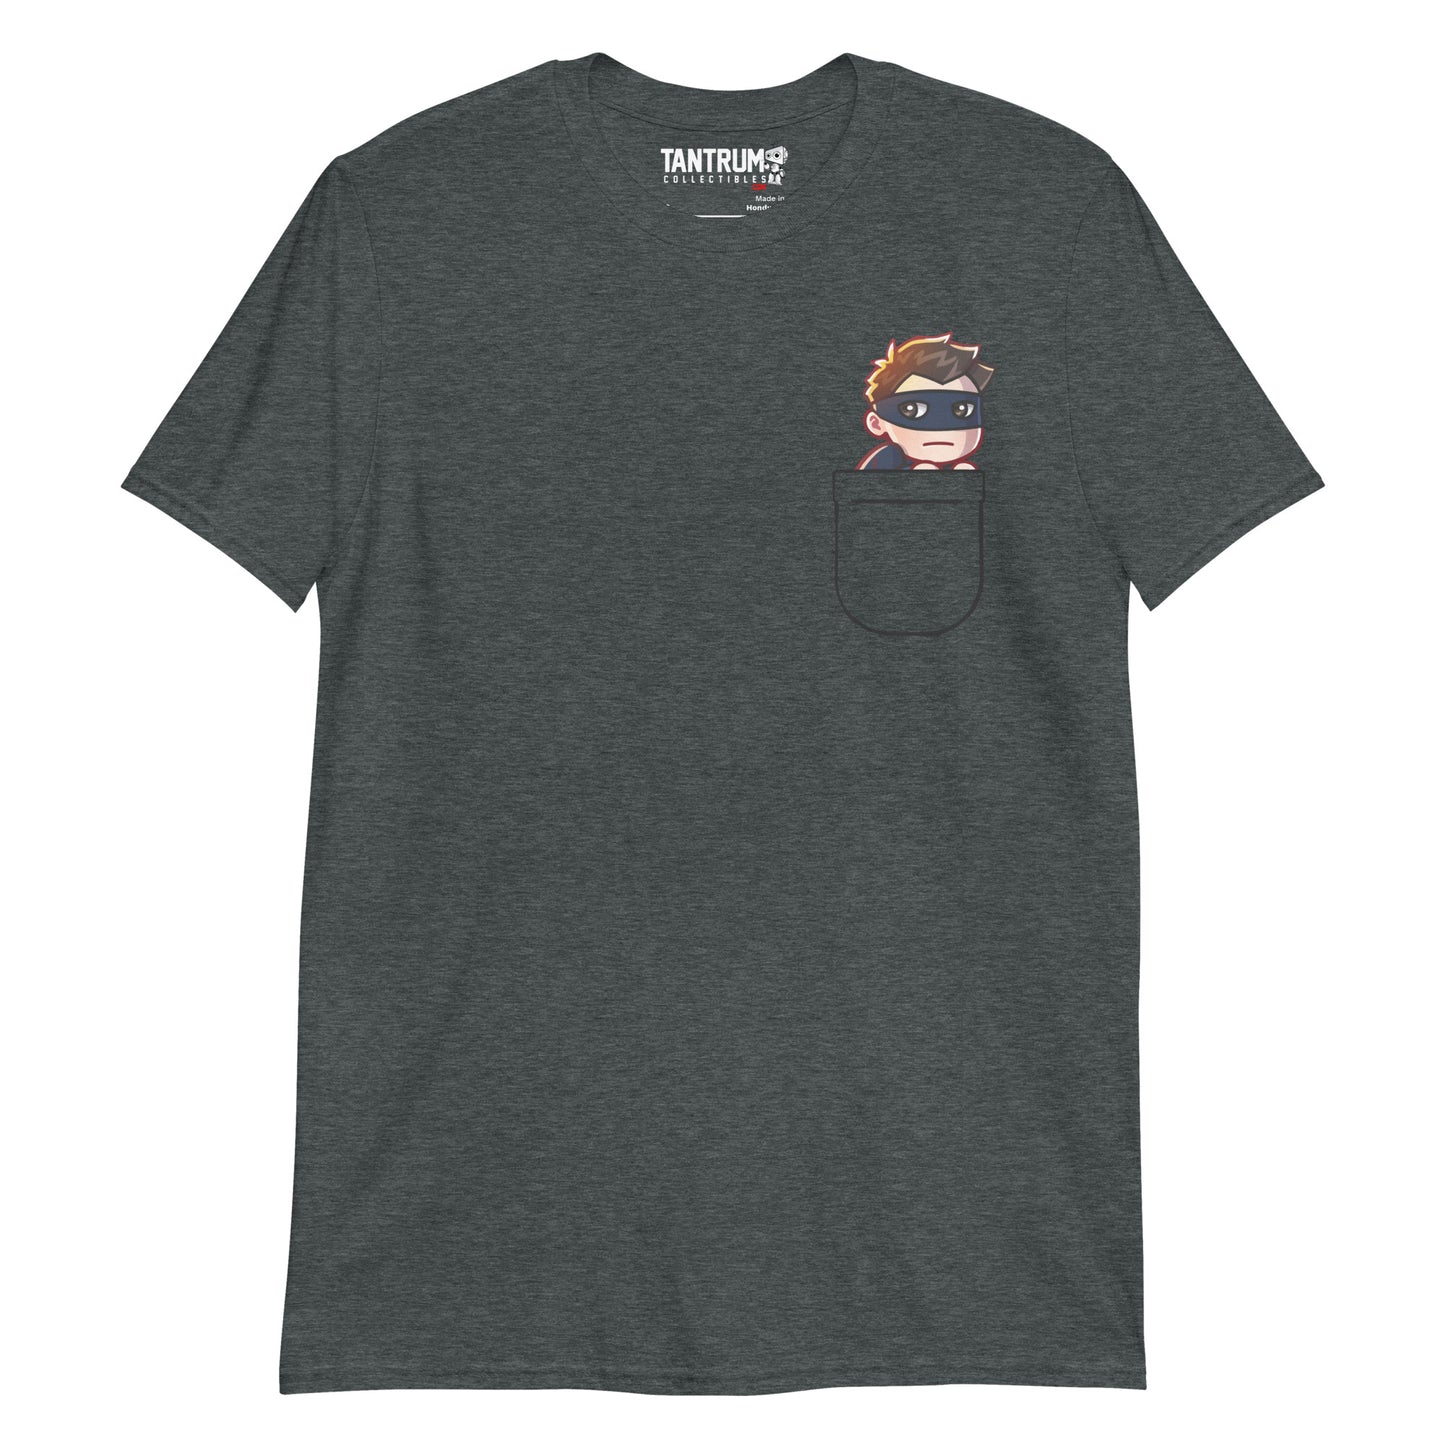 Trikslyr - Unisex T-Shirt - Printed Pocket Sneaky